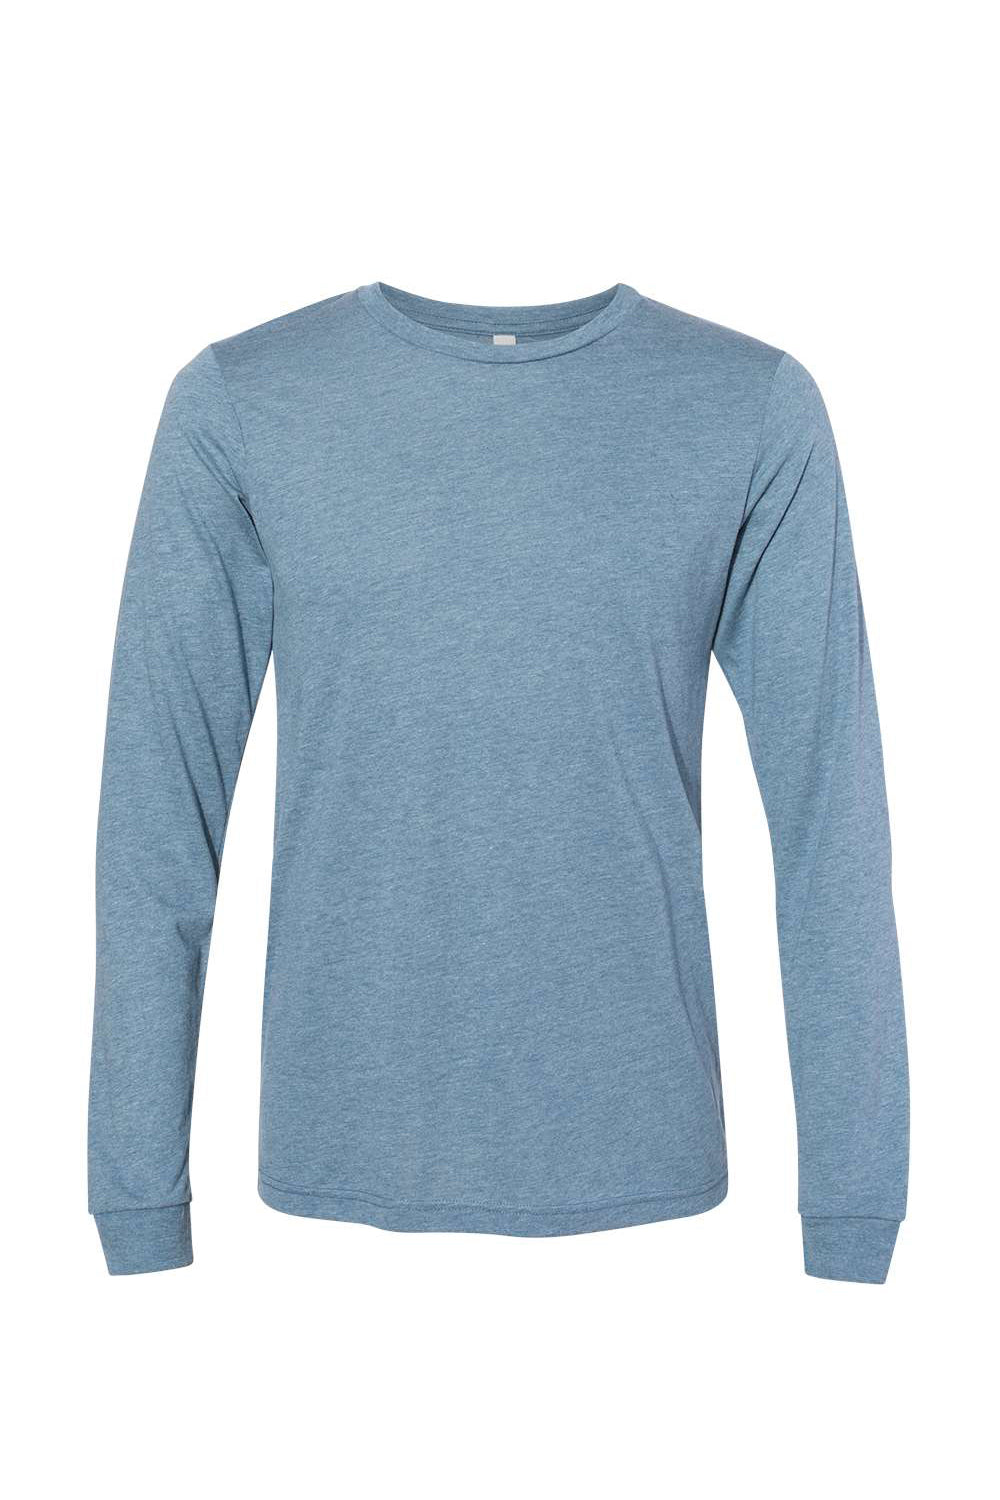 Bella + Canvas BC3501/3501 Mens Jersey Long Sleeve Crewneck T-Shirt Denim Blue Triblend Flat Front